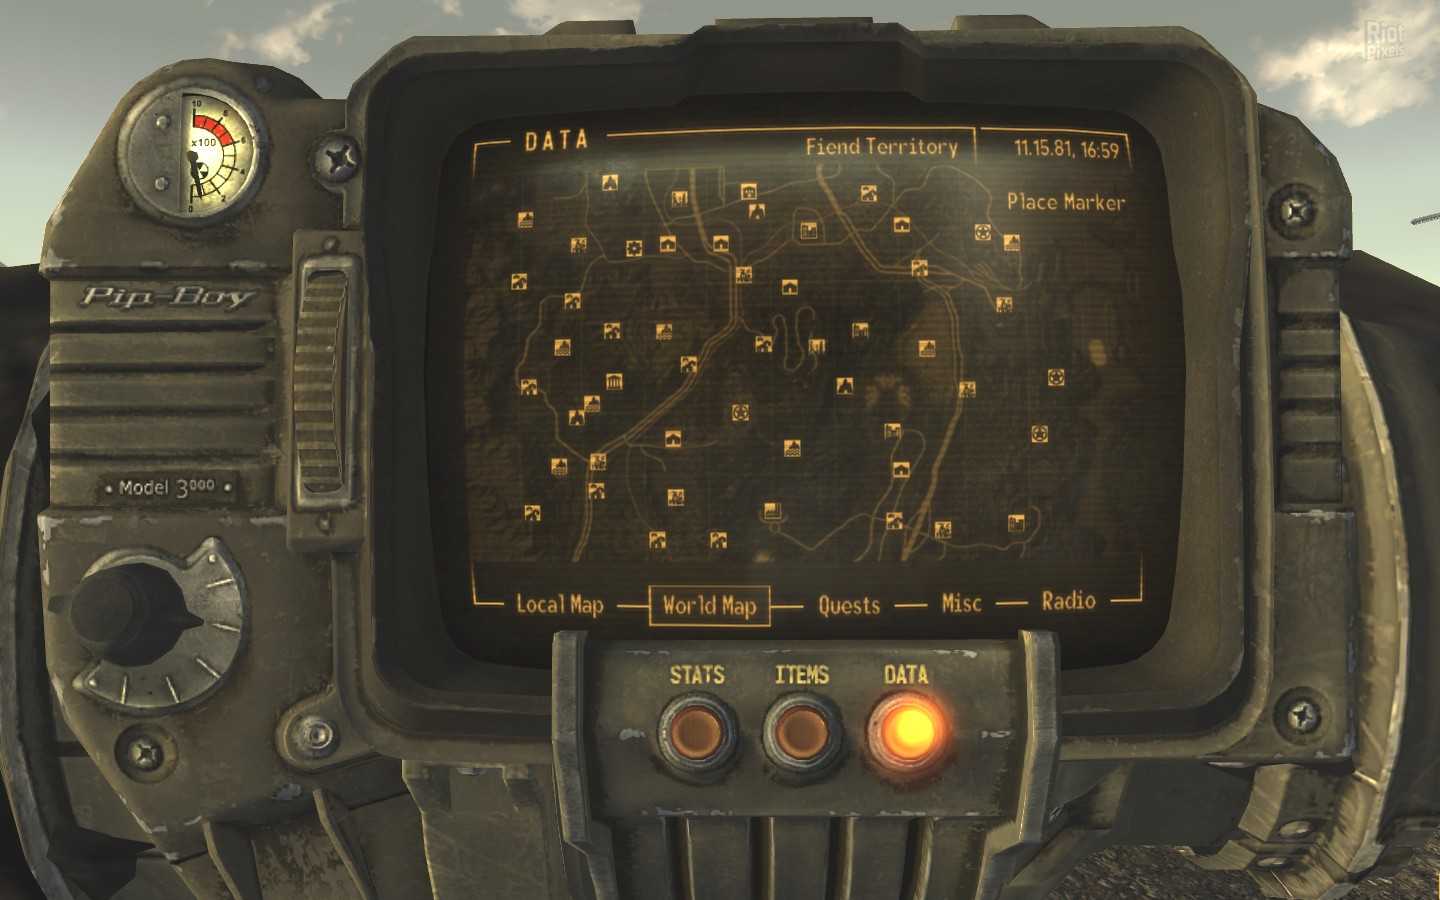 Fallout: new vegas — прохождение всех квестов